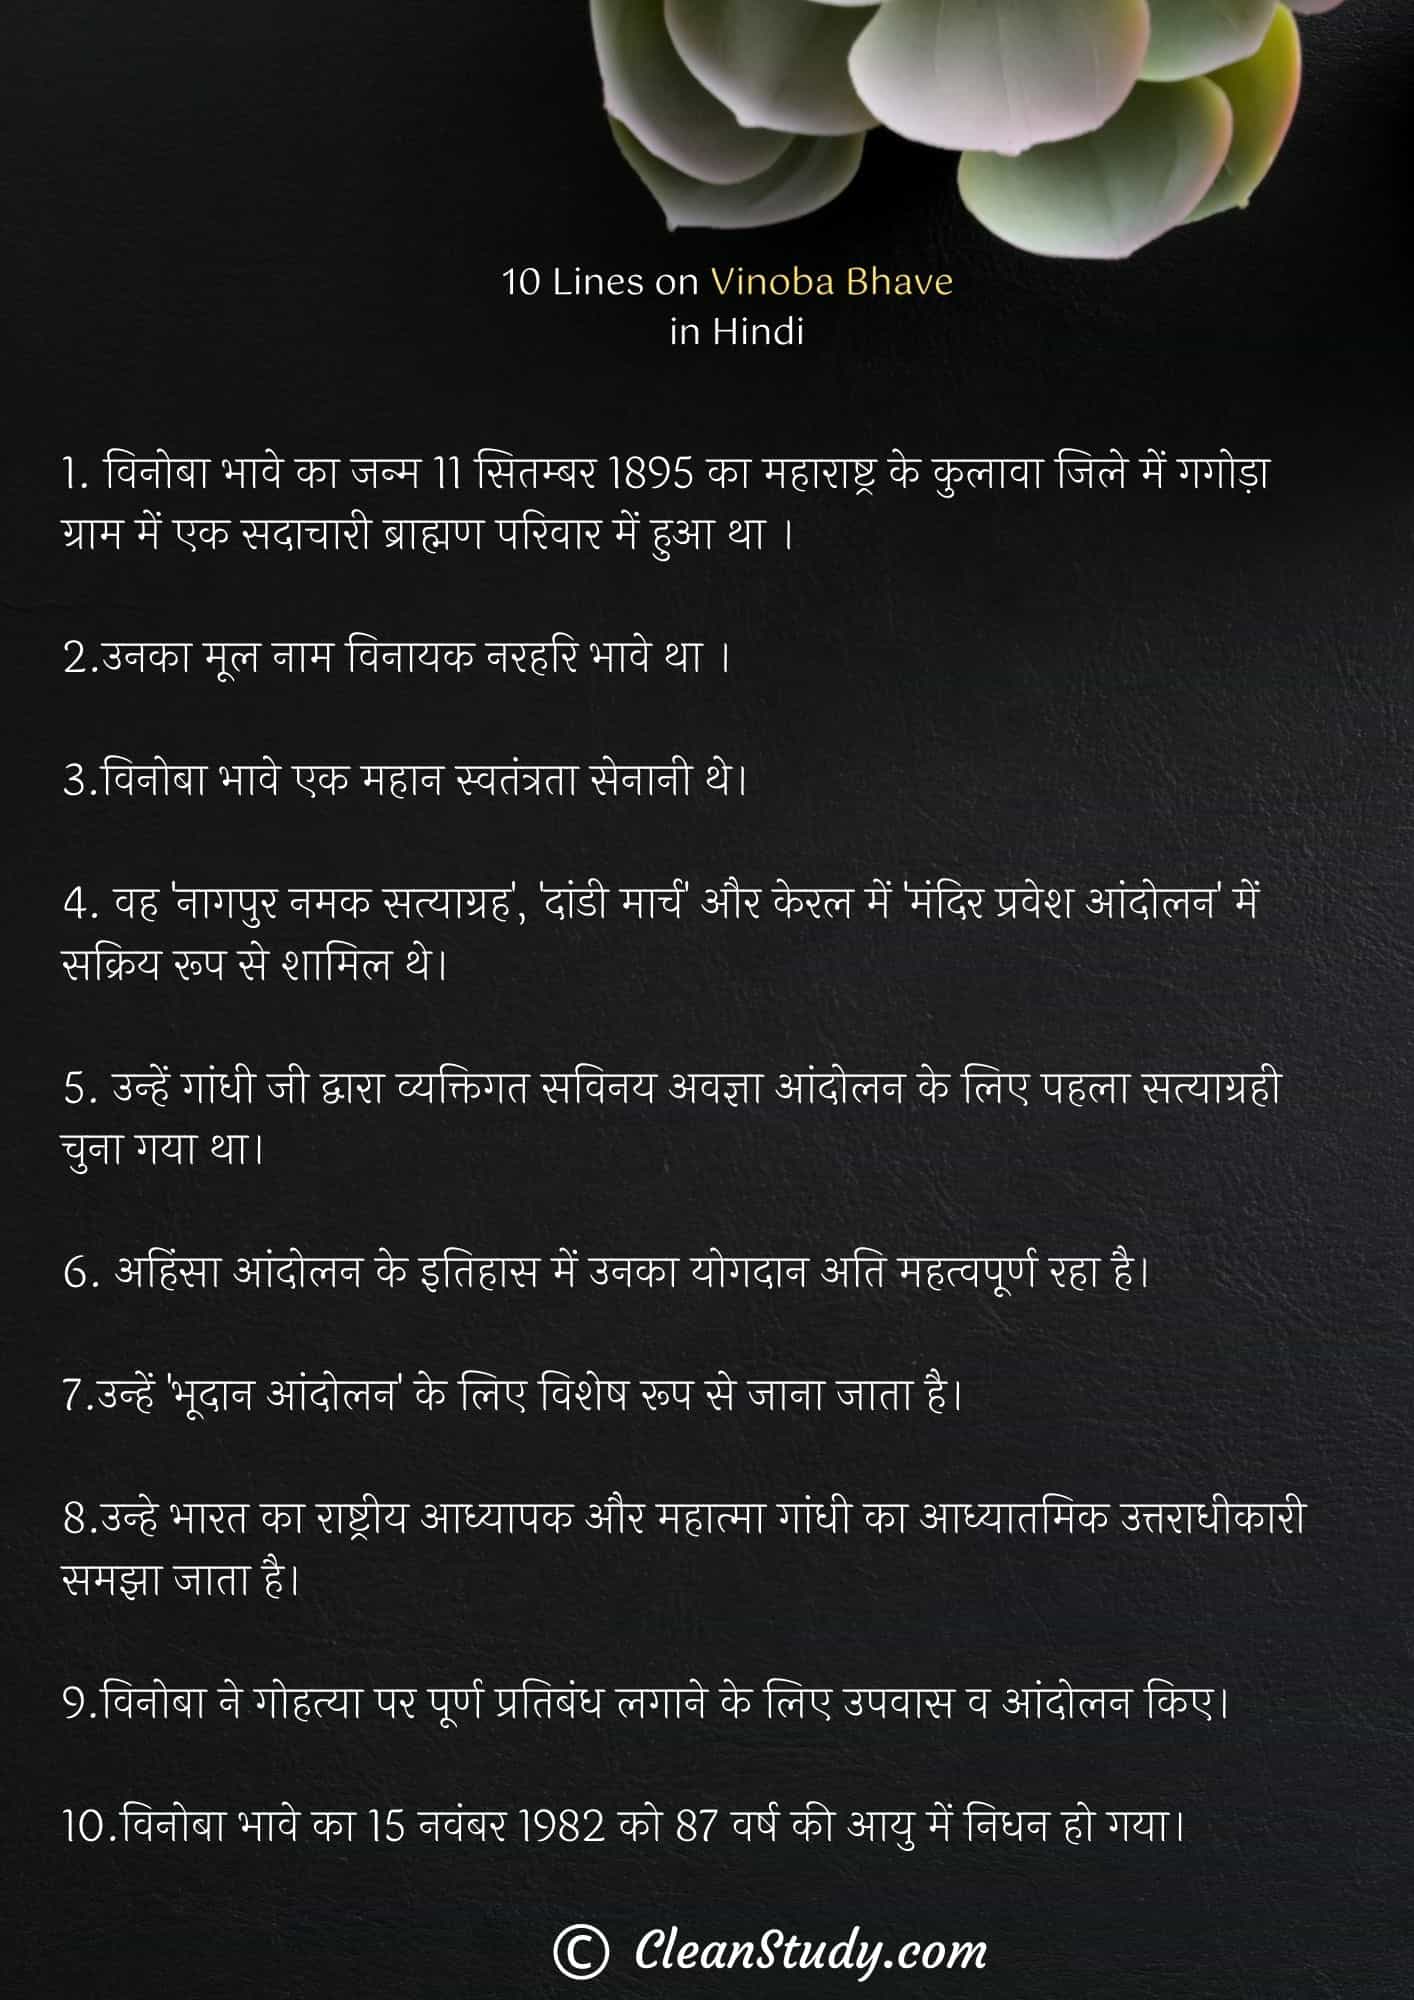 10 Lines on Vinoba Bhave in Hindi